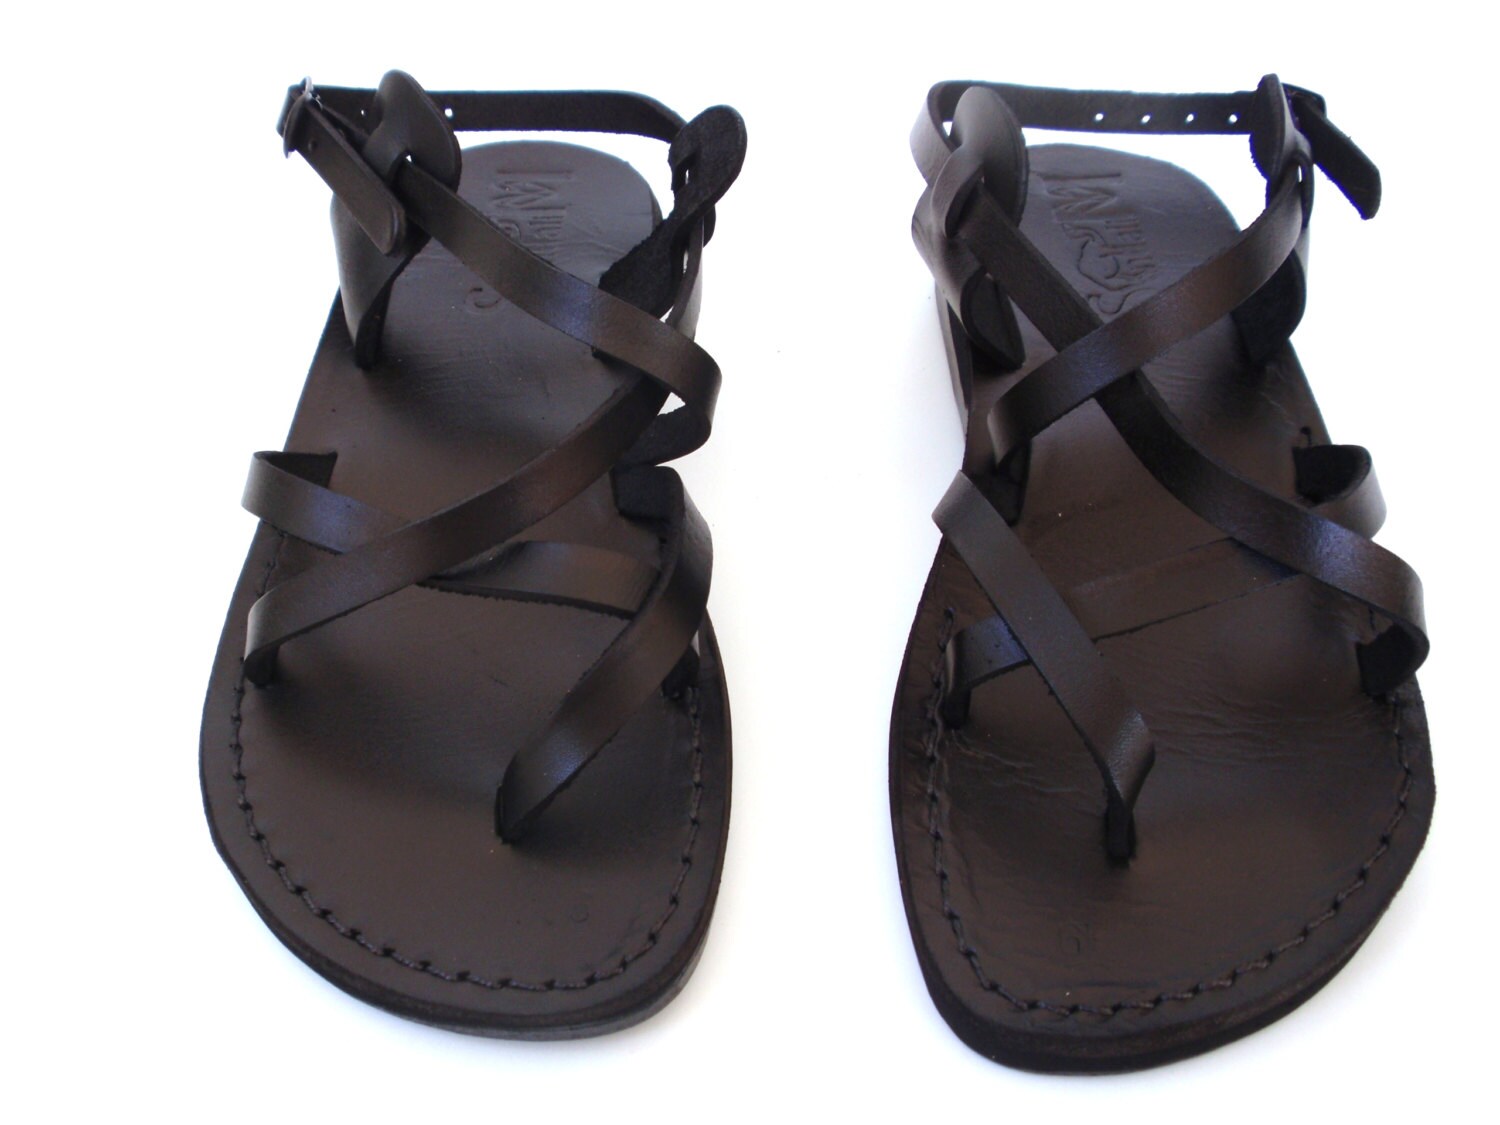 Leather Sandals GLADIATOR Shoes Thongs Flip Flops by Sandalimshop